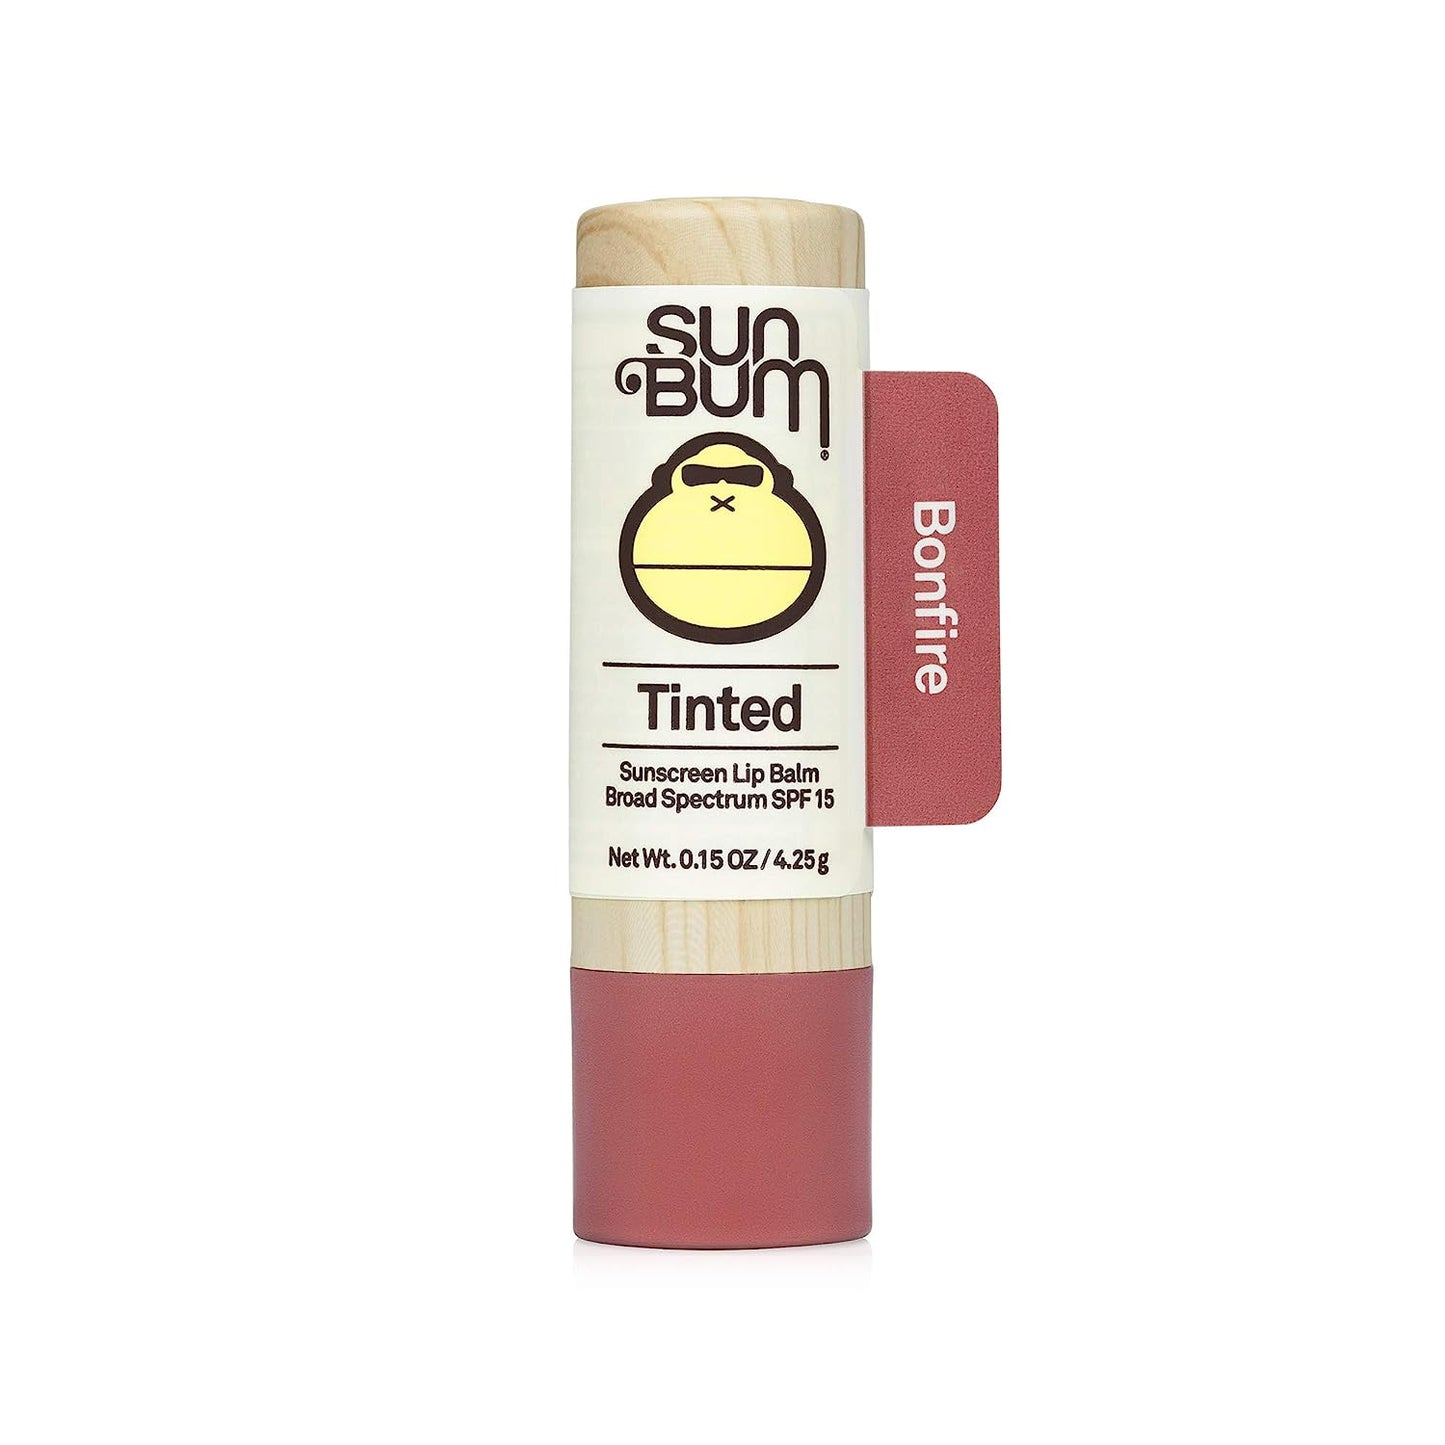 Sun Bum Tinted Sunscreen Lip Balm SPF 15 0.15 oz. / 4.25g